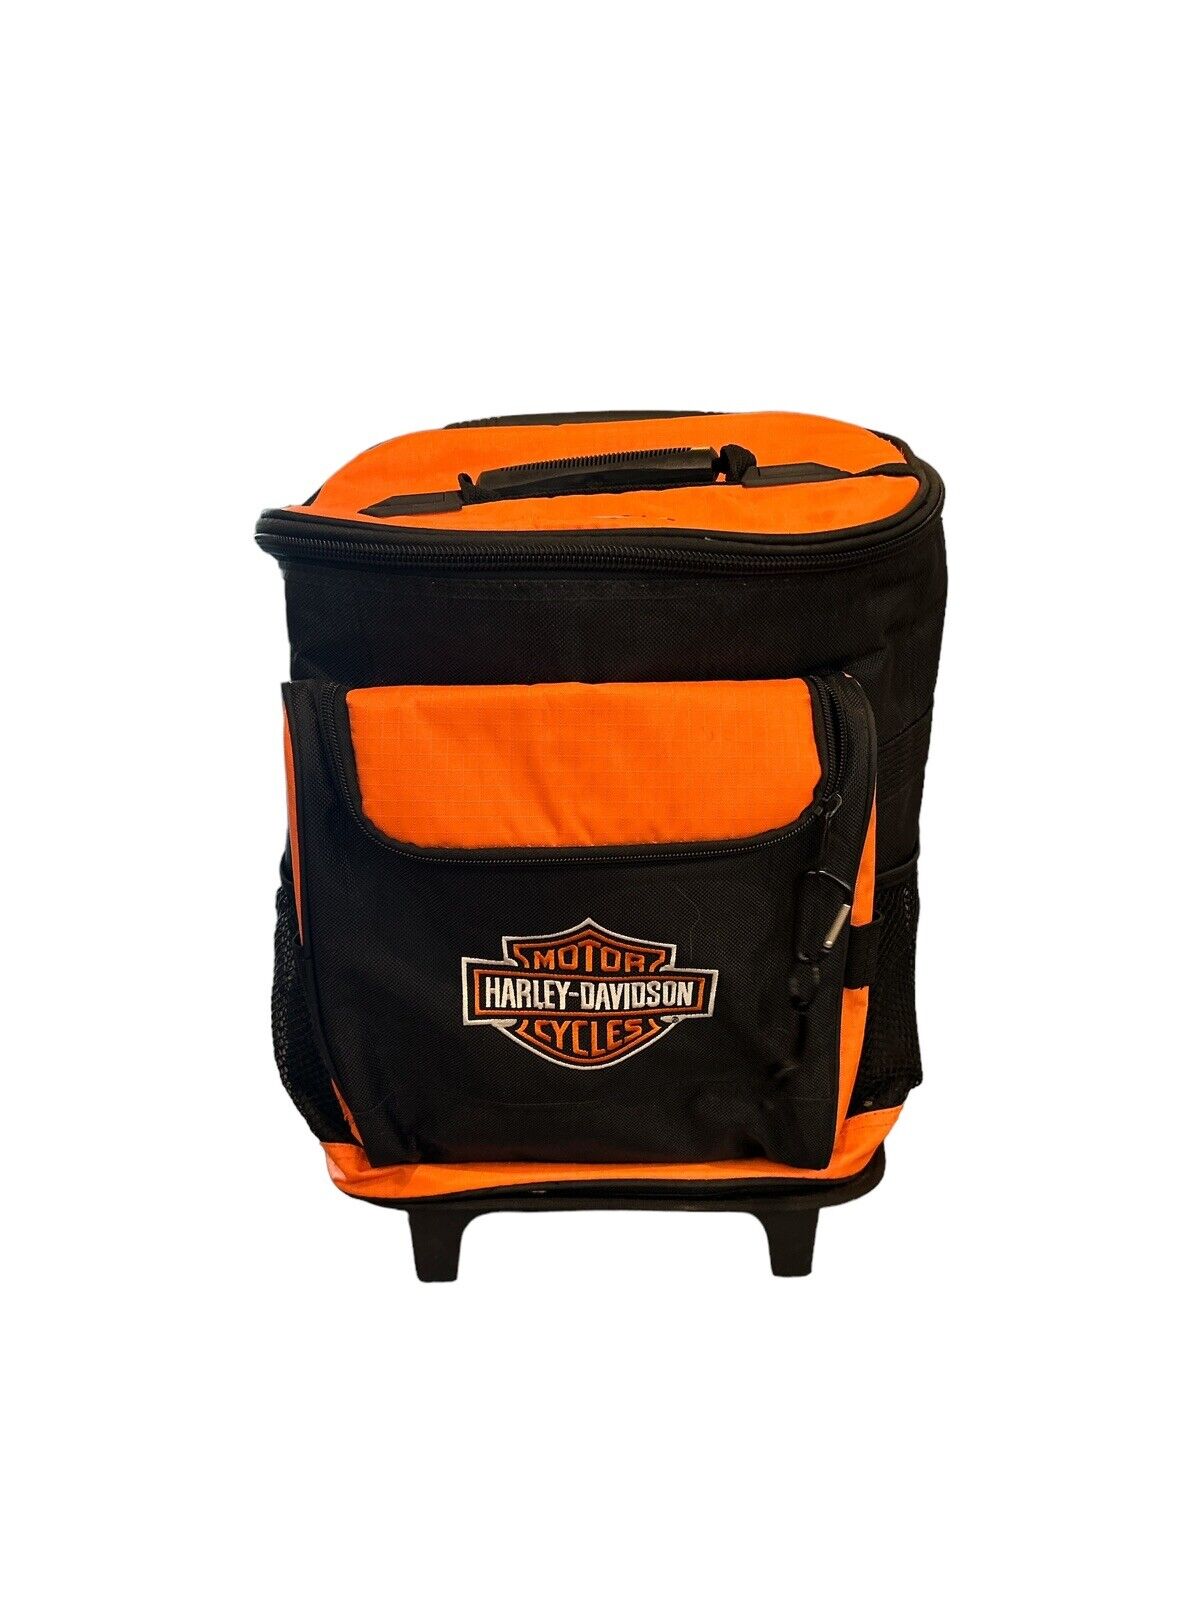 Harley Davidson Insulated Portable Cooler Travel Backpack Bag w/ Wheels Rolls